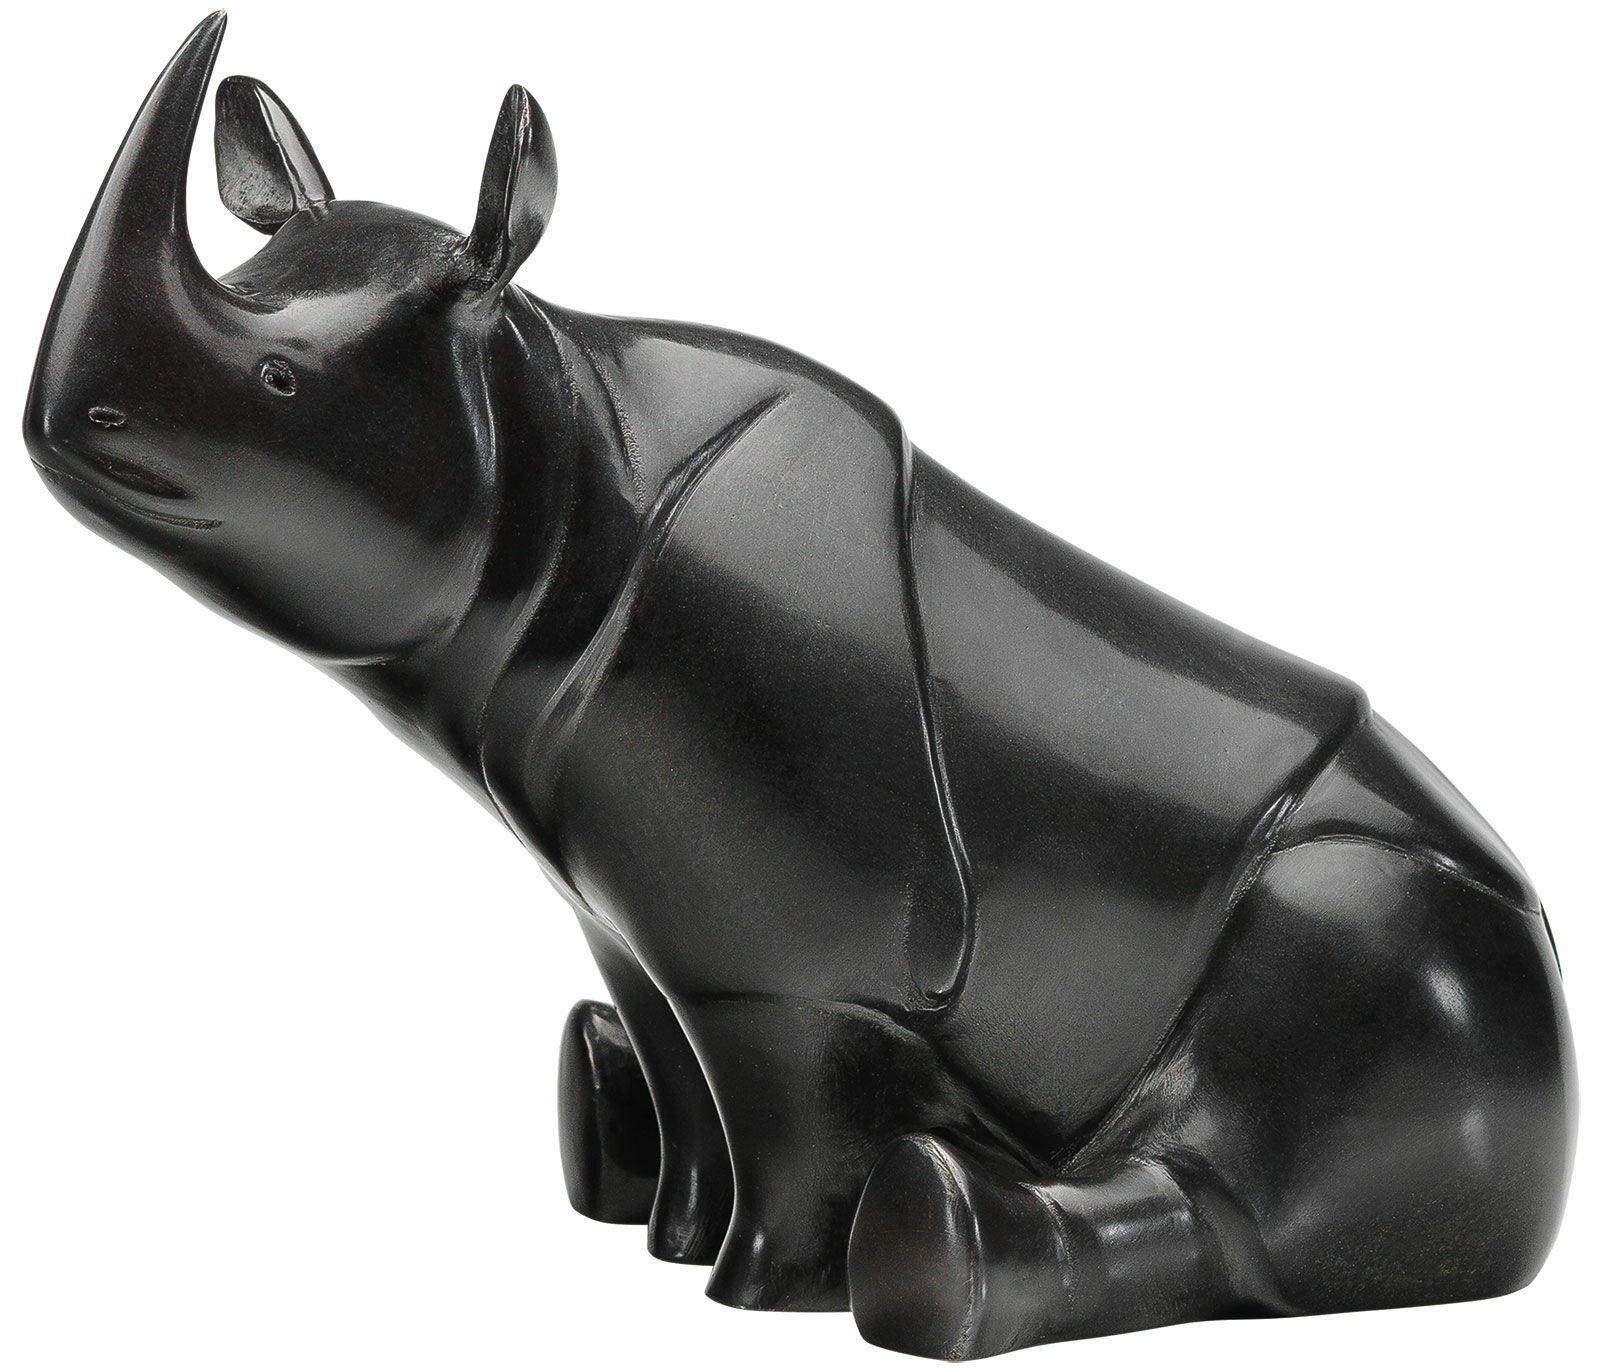 Sculpture "Rhino", bronze grey/black by Evert den Hartog